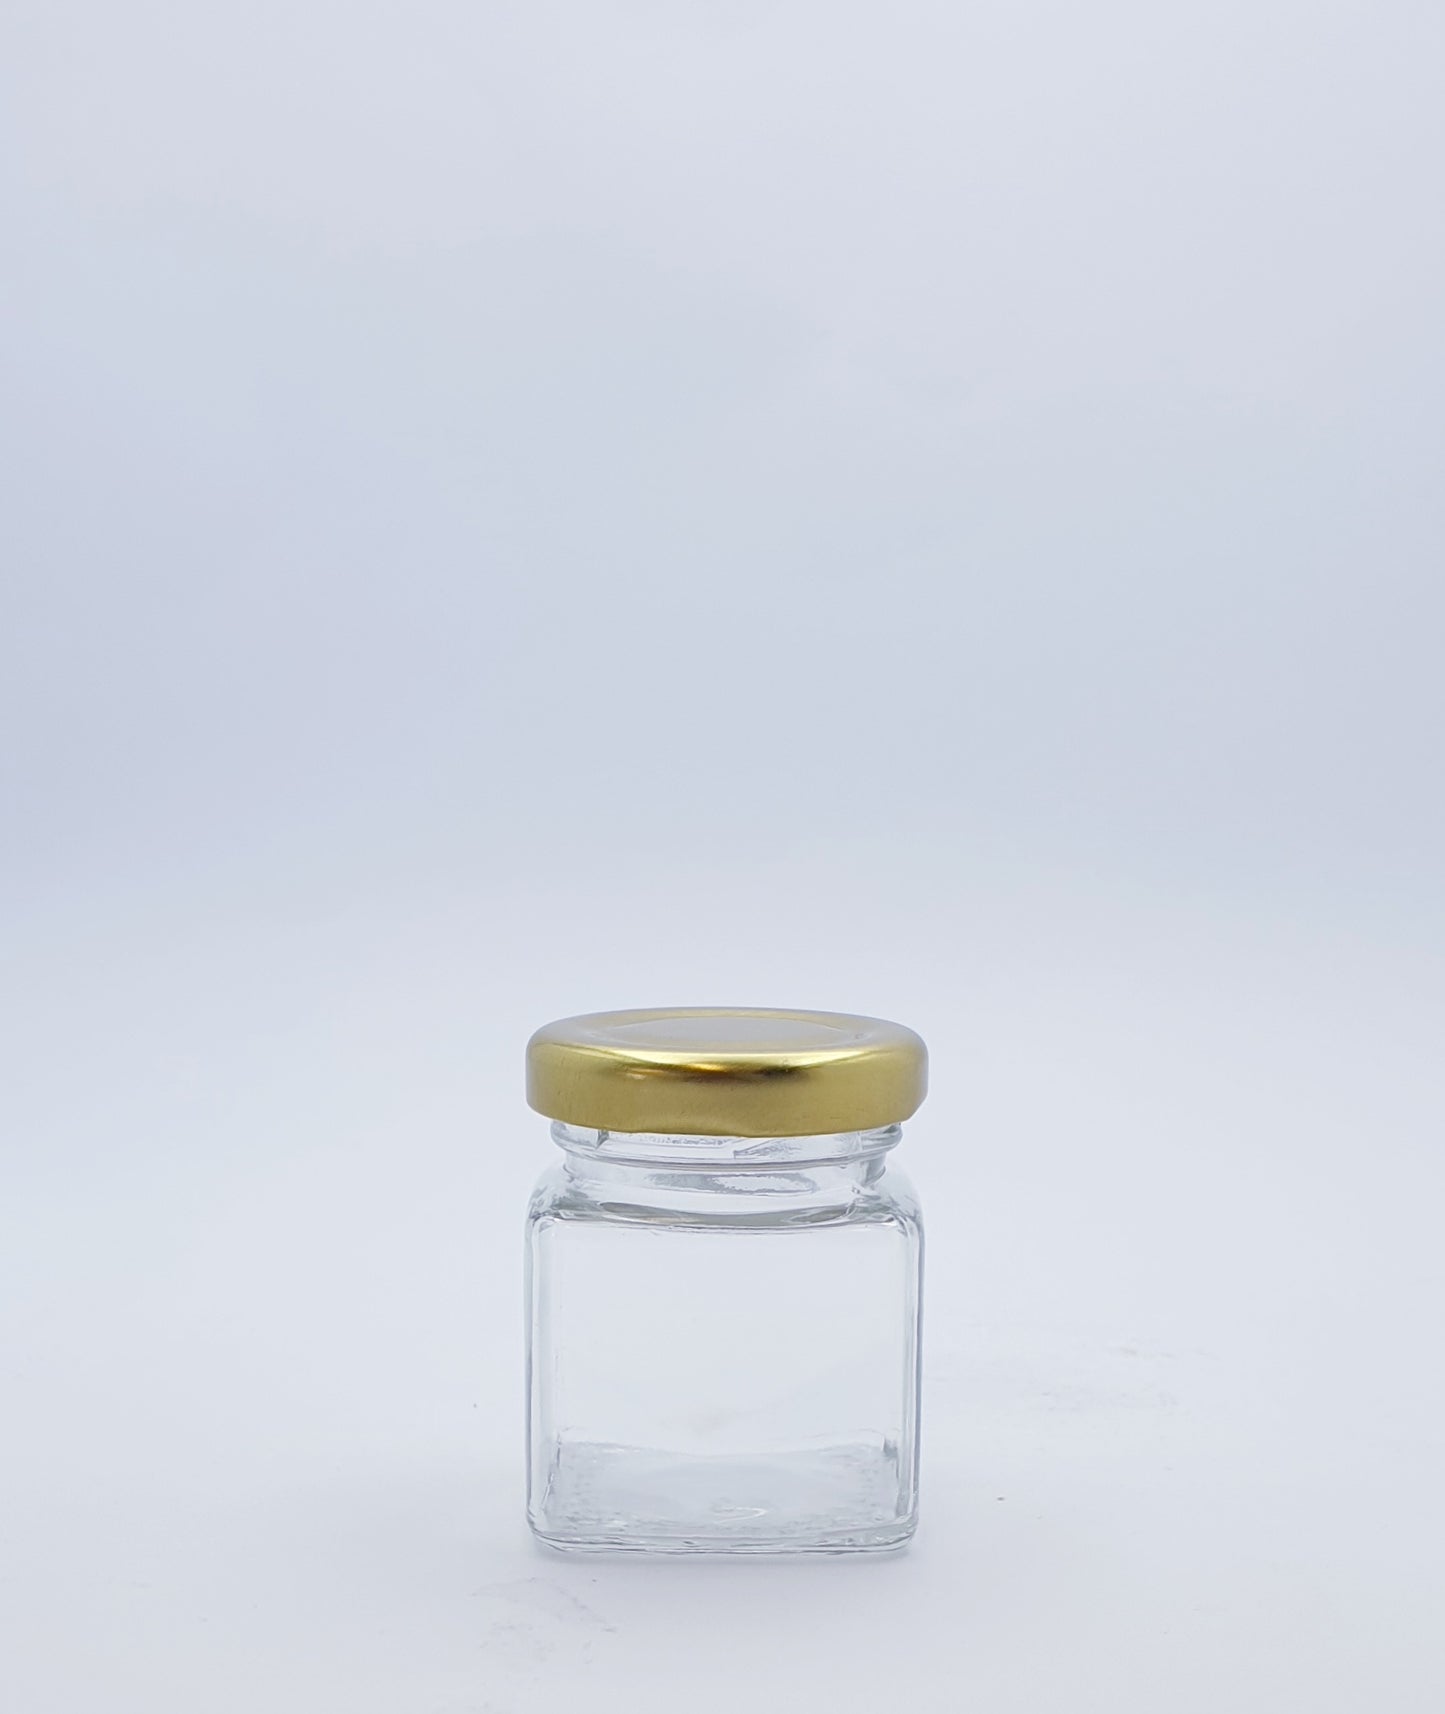 50ml Square Glass Jar W/Lid - 72 Jars and Lids Per Pack**New smaller pack size - Unit Cost $0.87c Jar&Lid